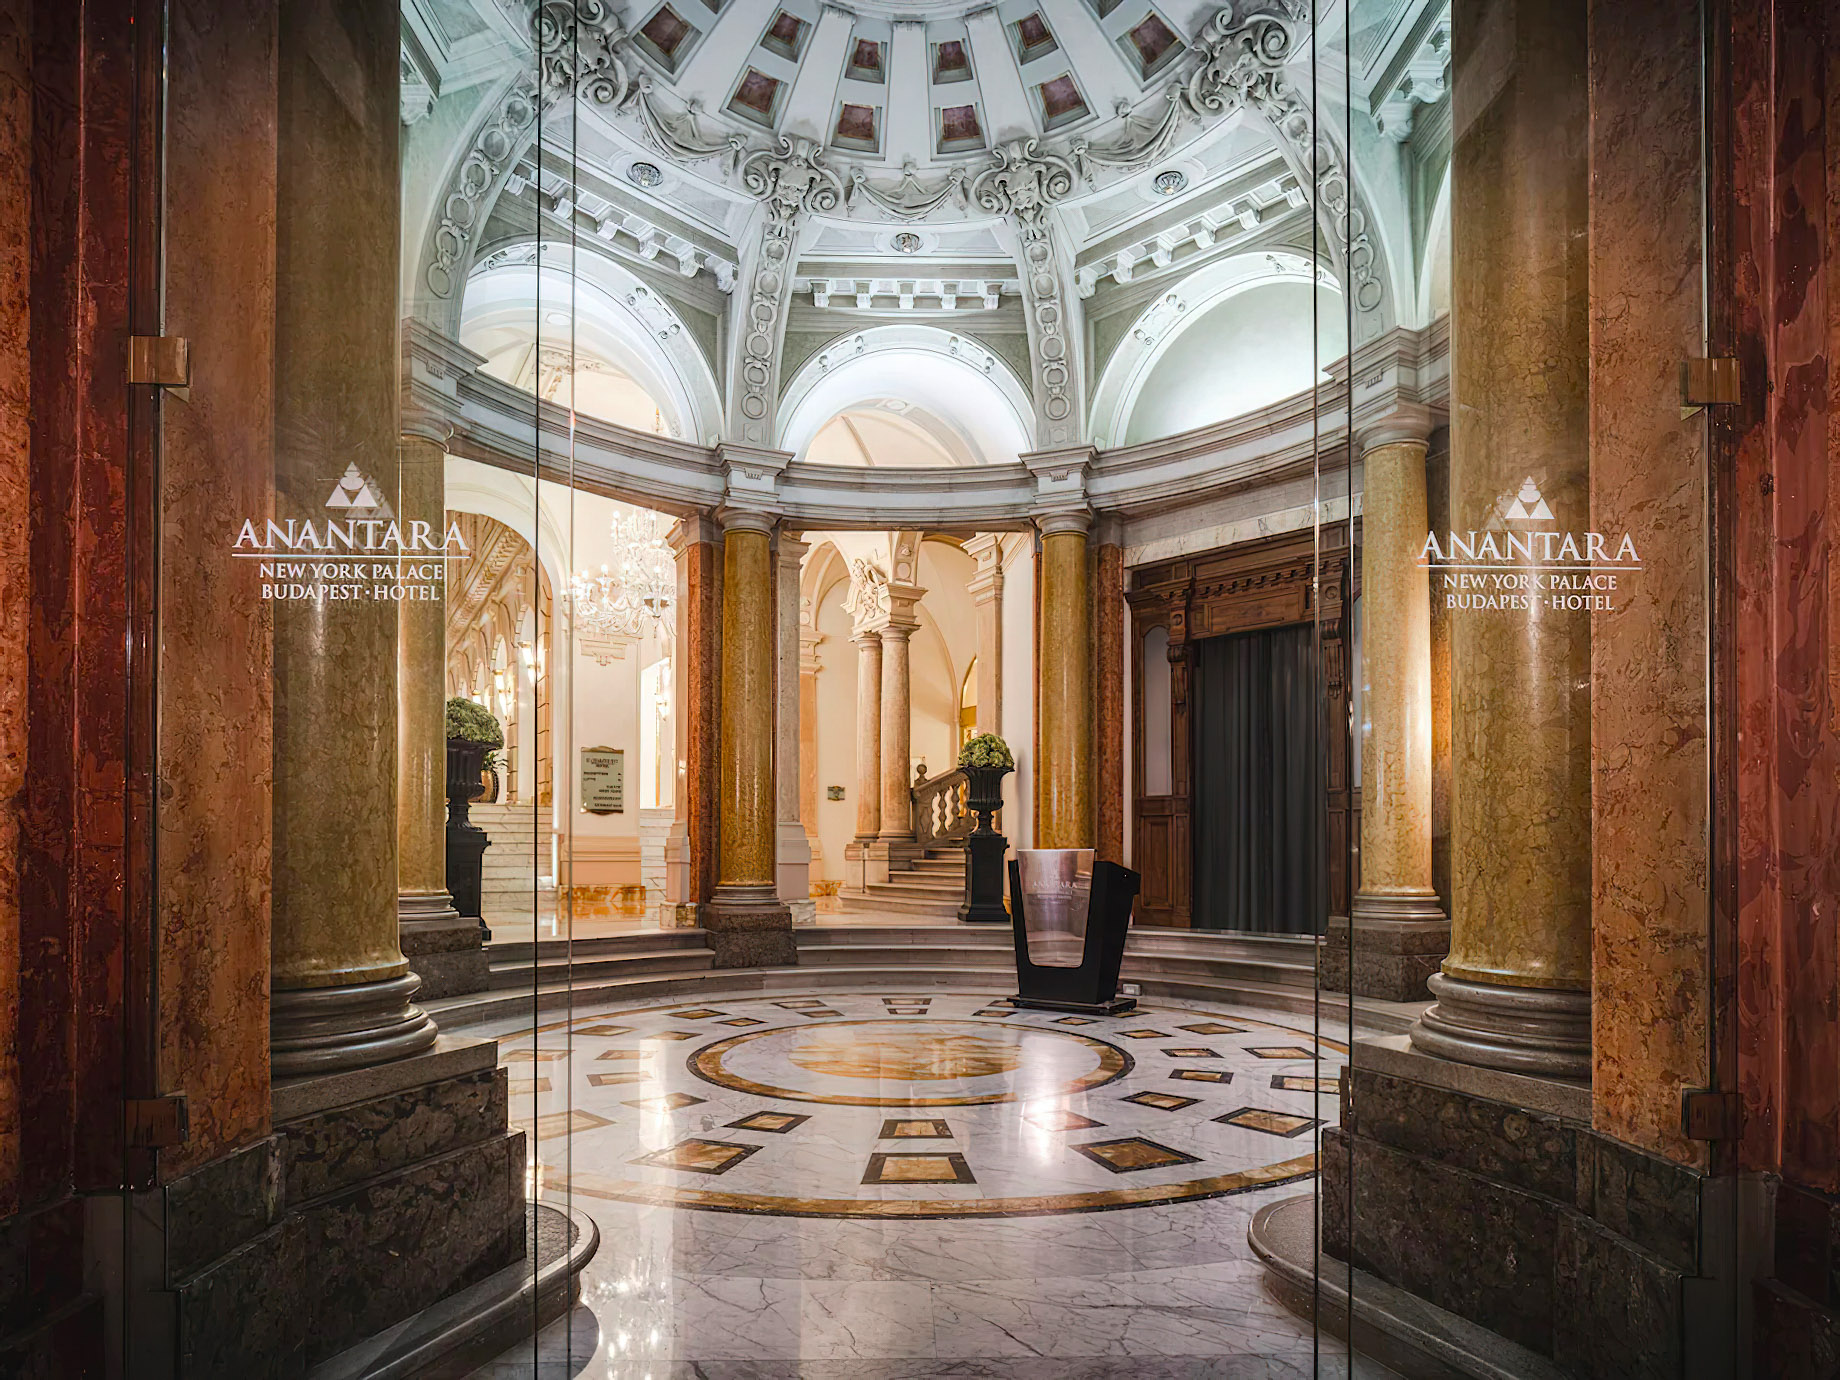 Anantara New York Palace Budapest Hotel - Hungary - Entrance